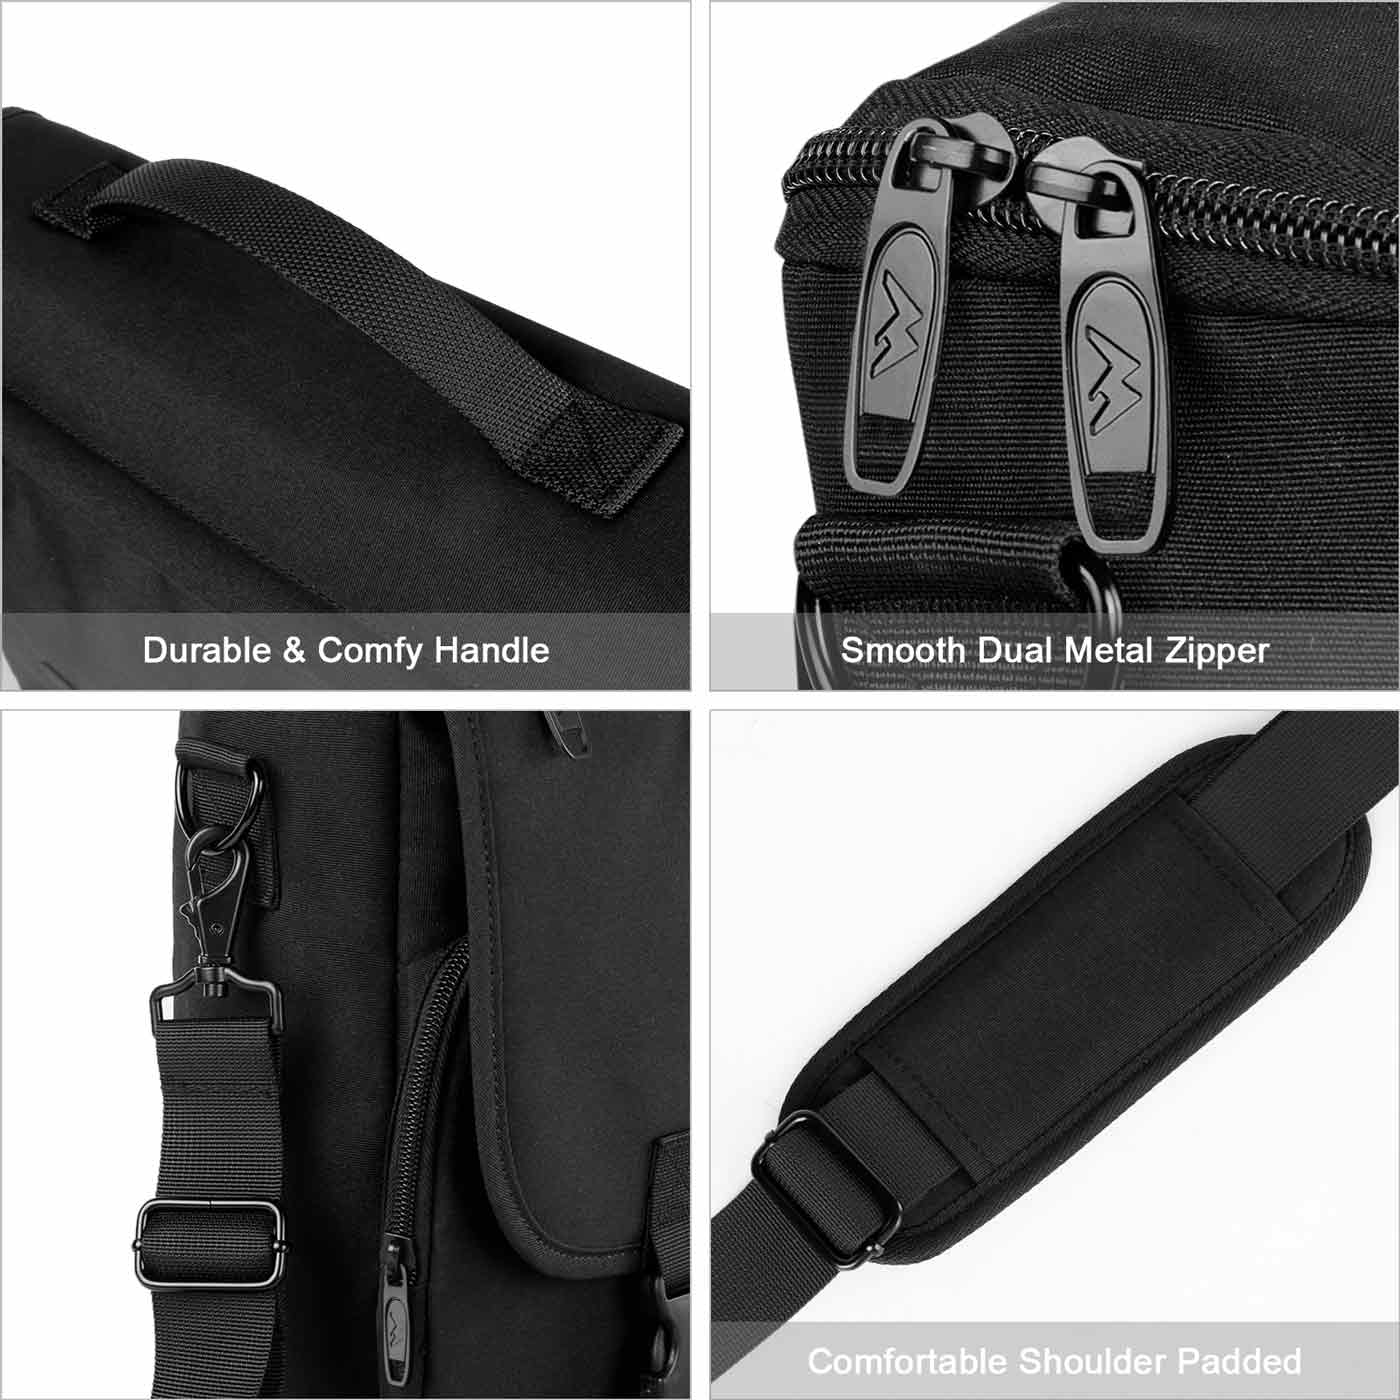 FR Fashion Co. 15.6 Men's Padded Laptop Compartment Messenger Bag Grey